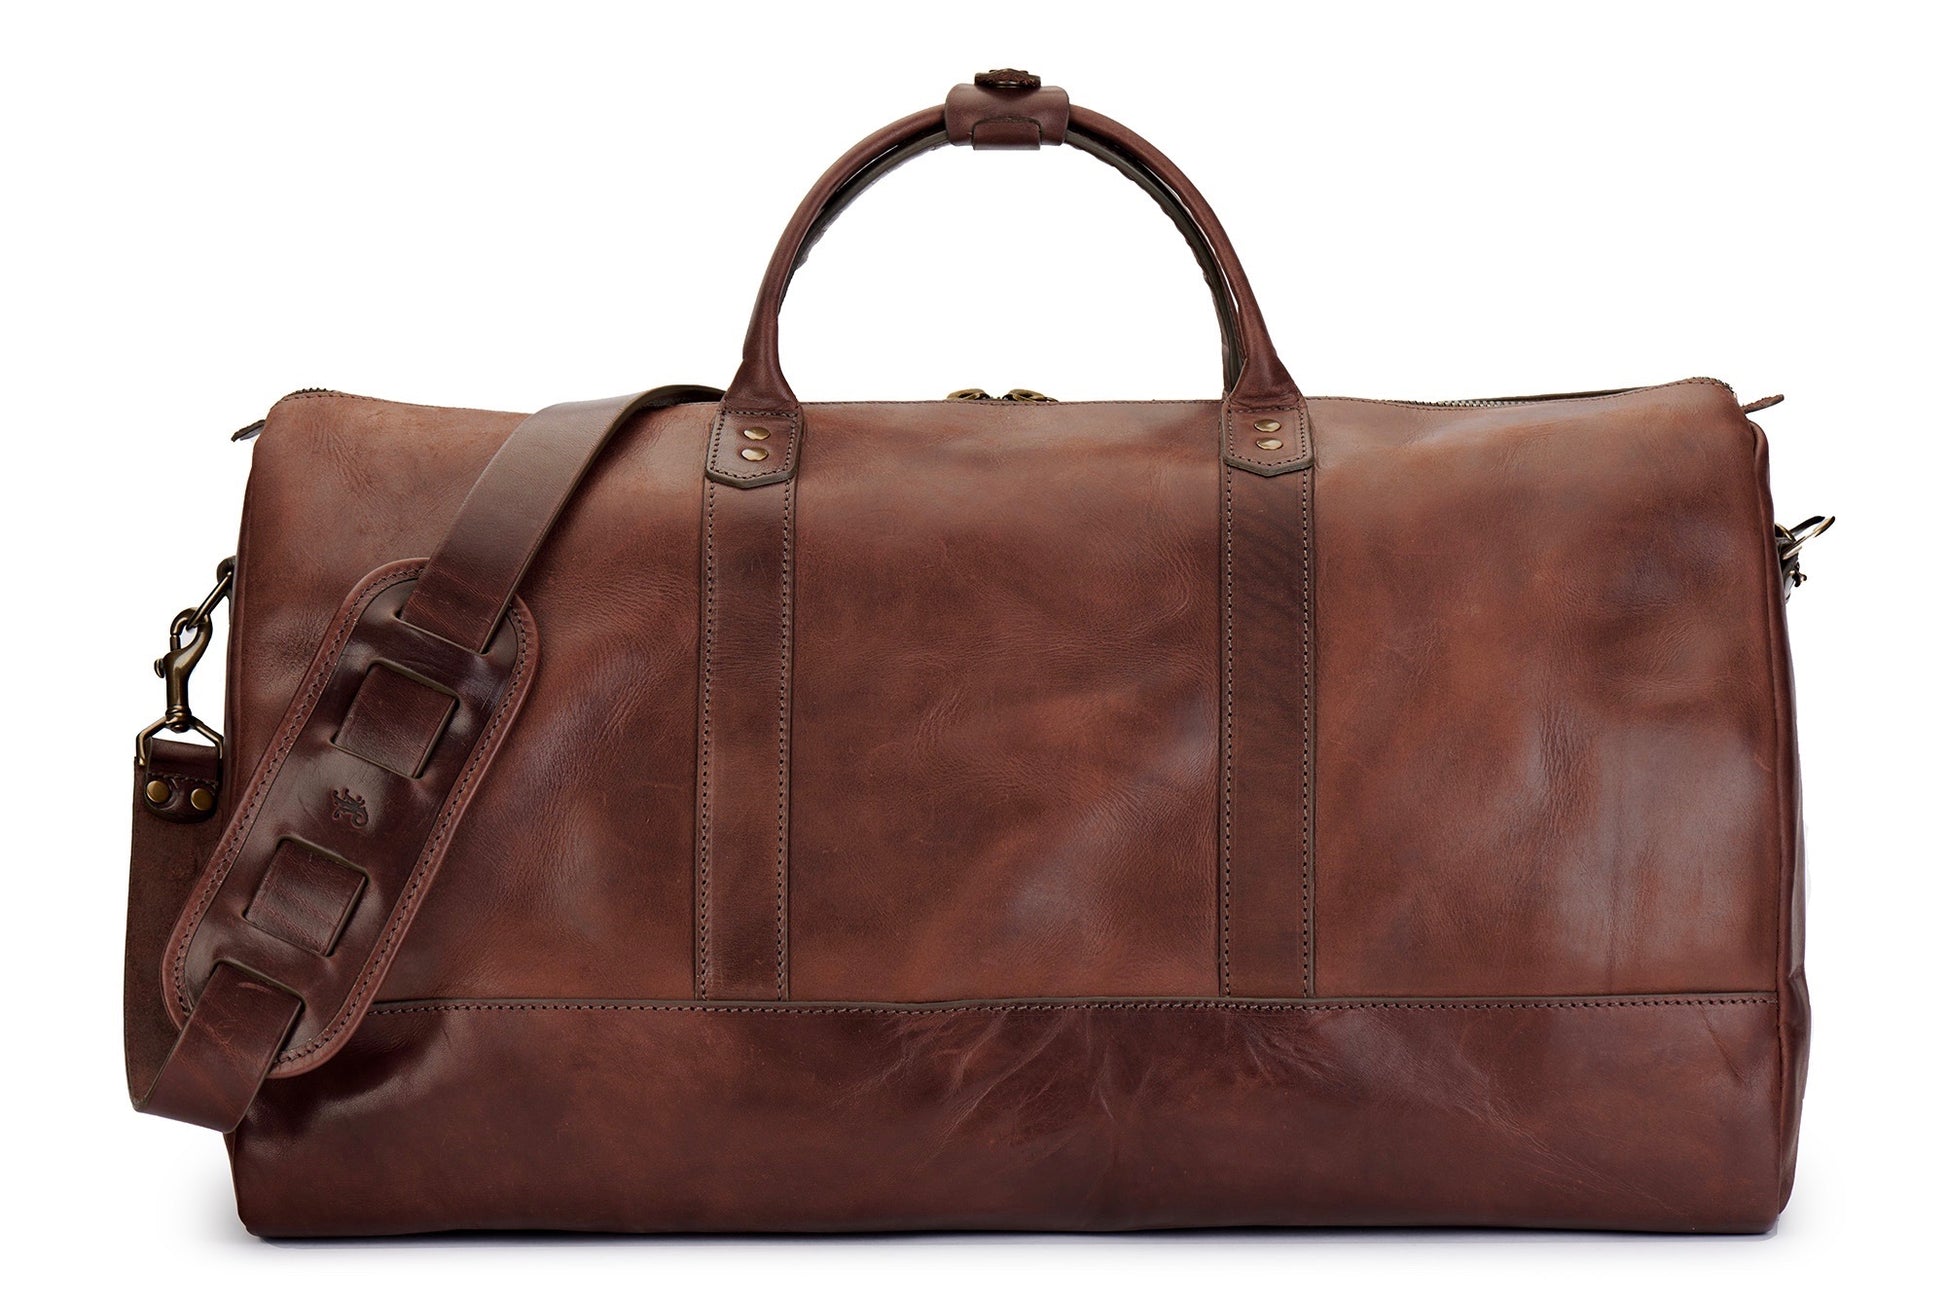 main featured image of Jackson Wayne Big Sur full grain vegetable tanned leather duffle bag in vintage brown